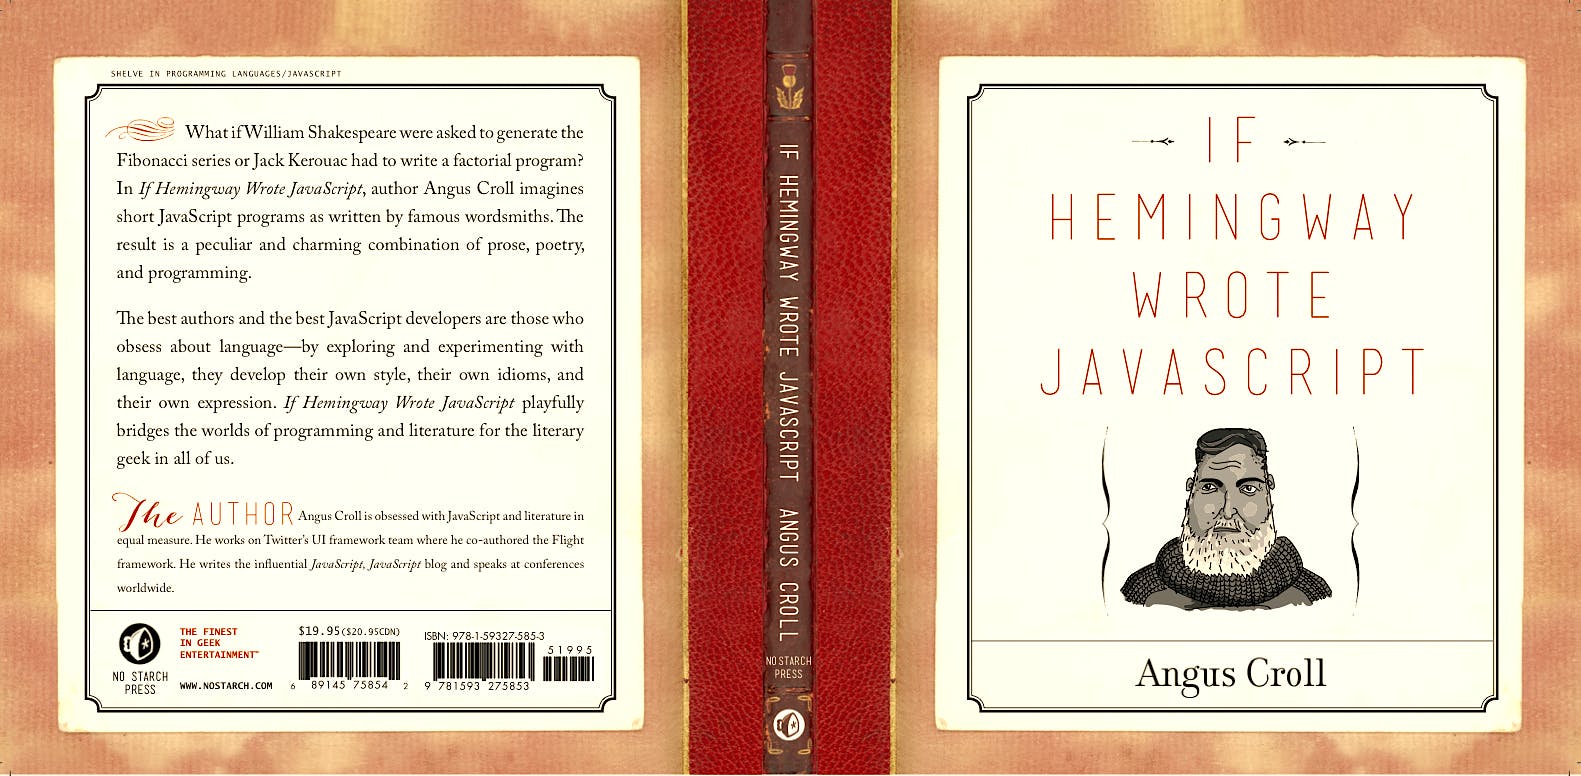 If Hemingway wrote JavaScript media 2